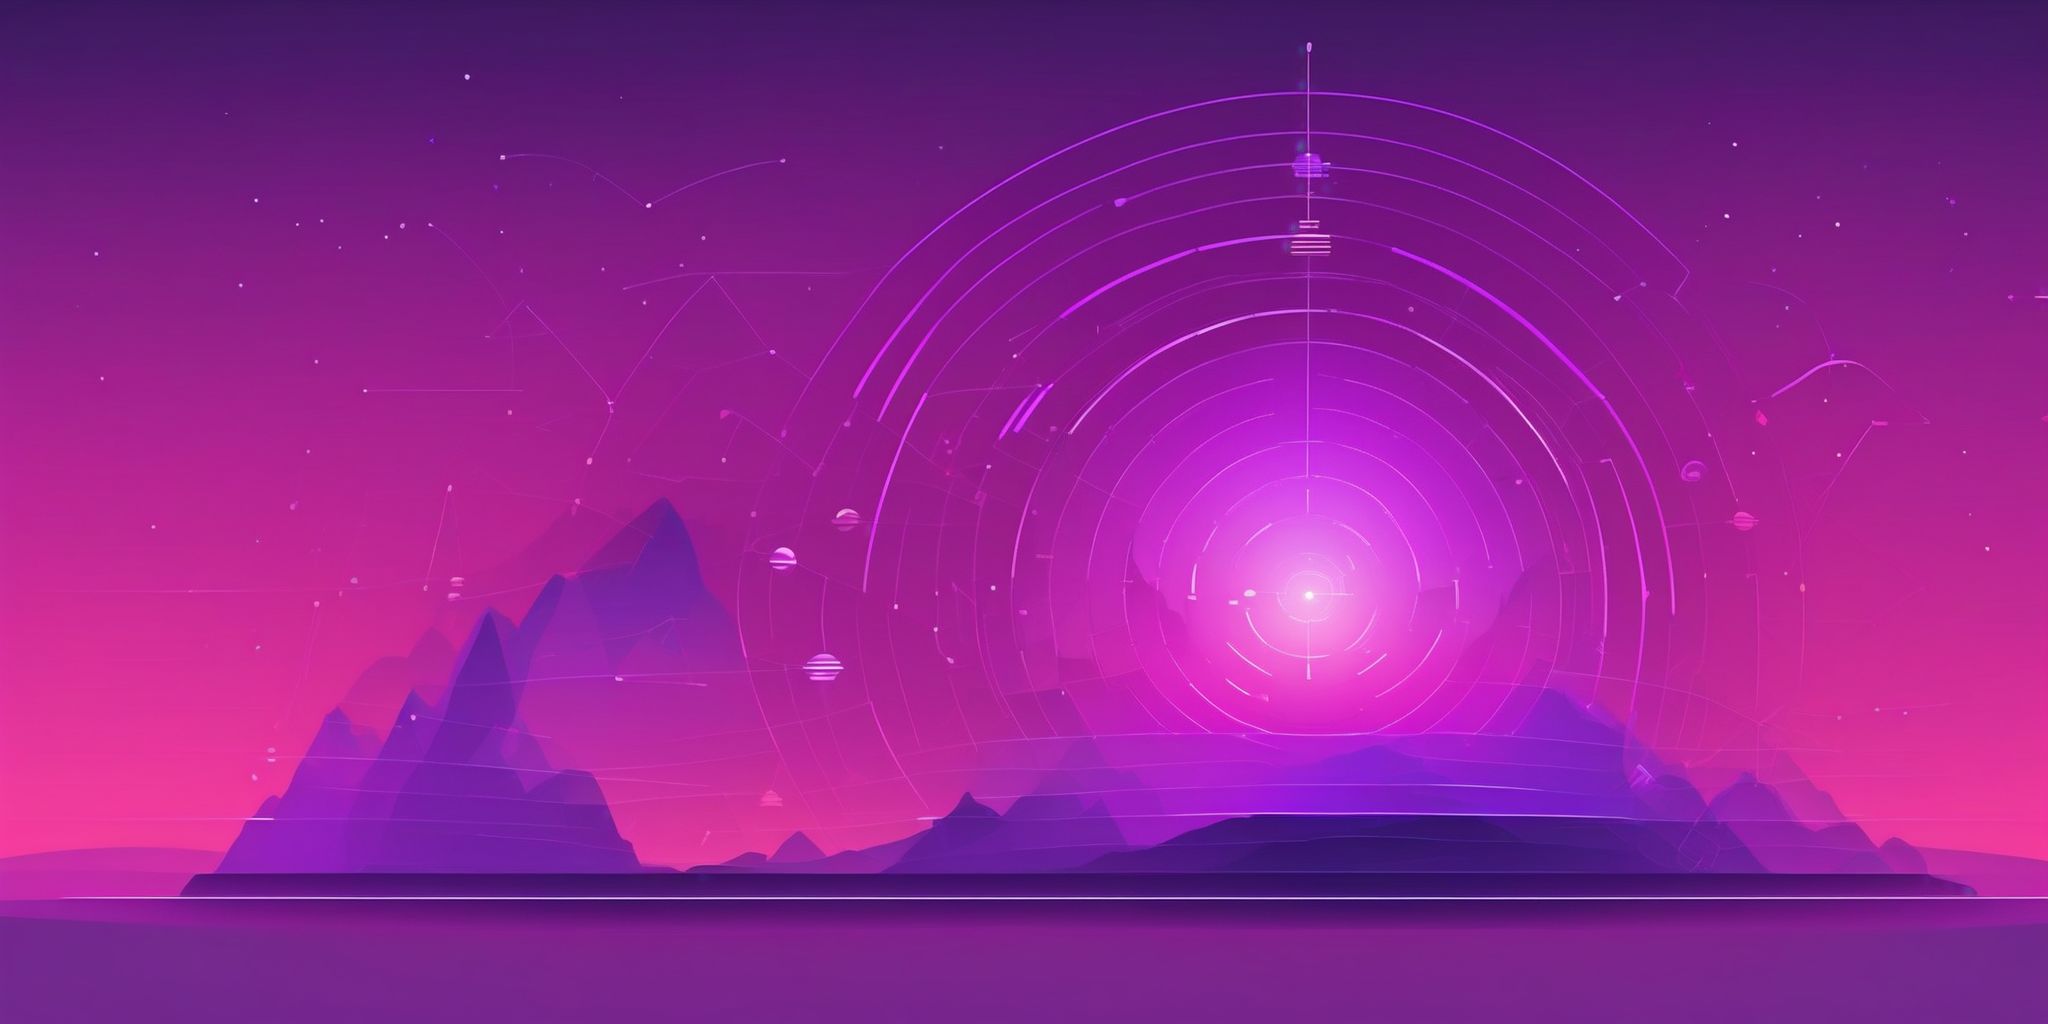 Radar in flat illustration style, colorful purple gradient colors